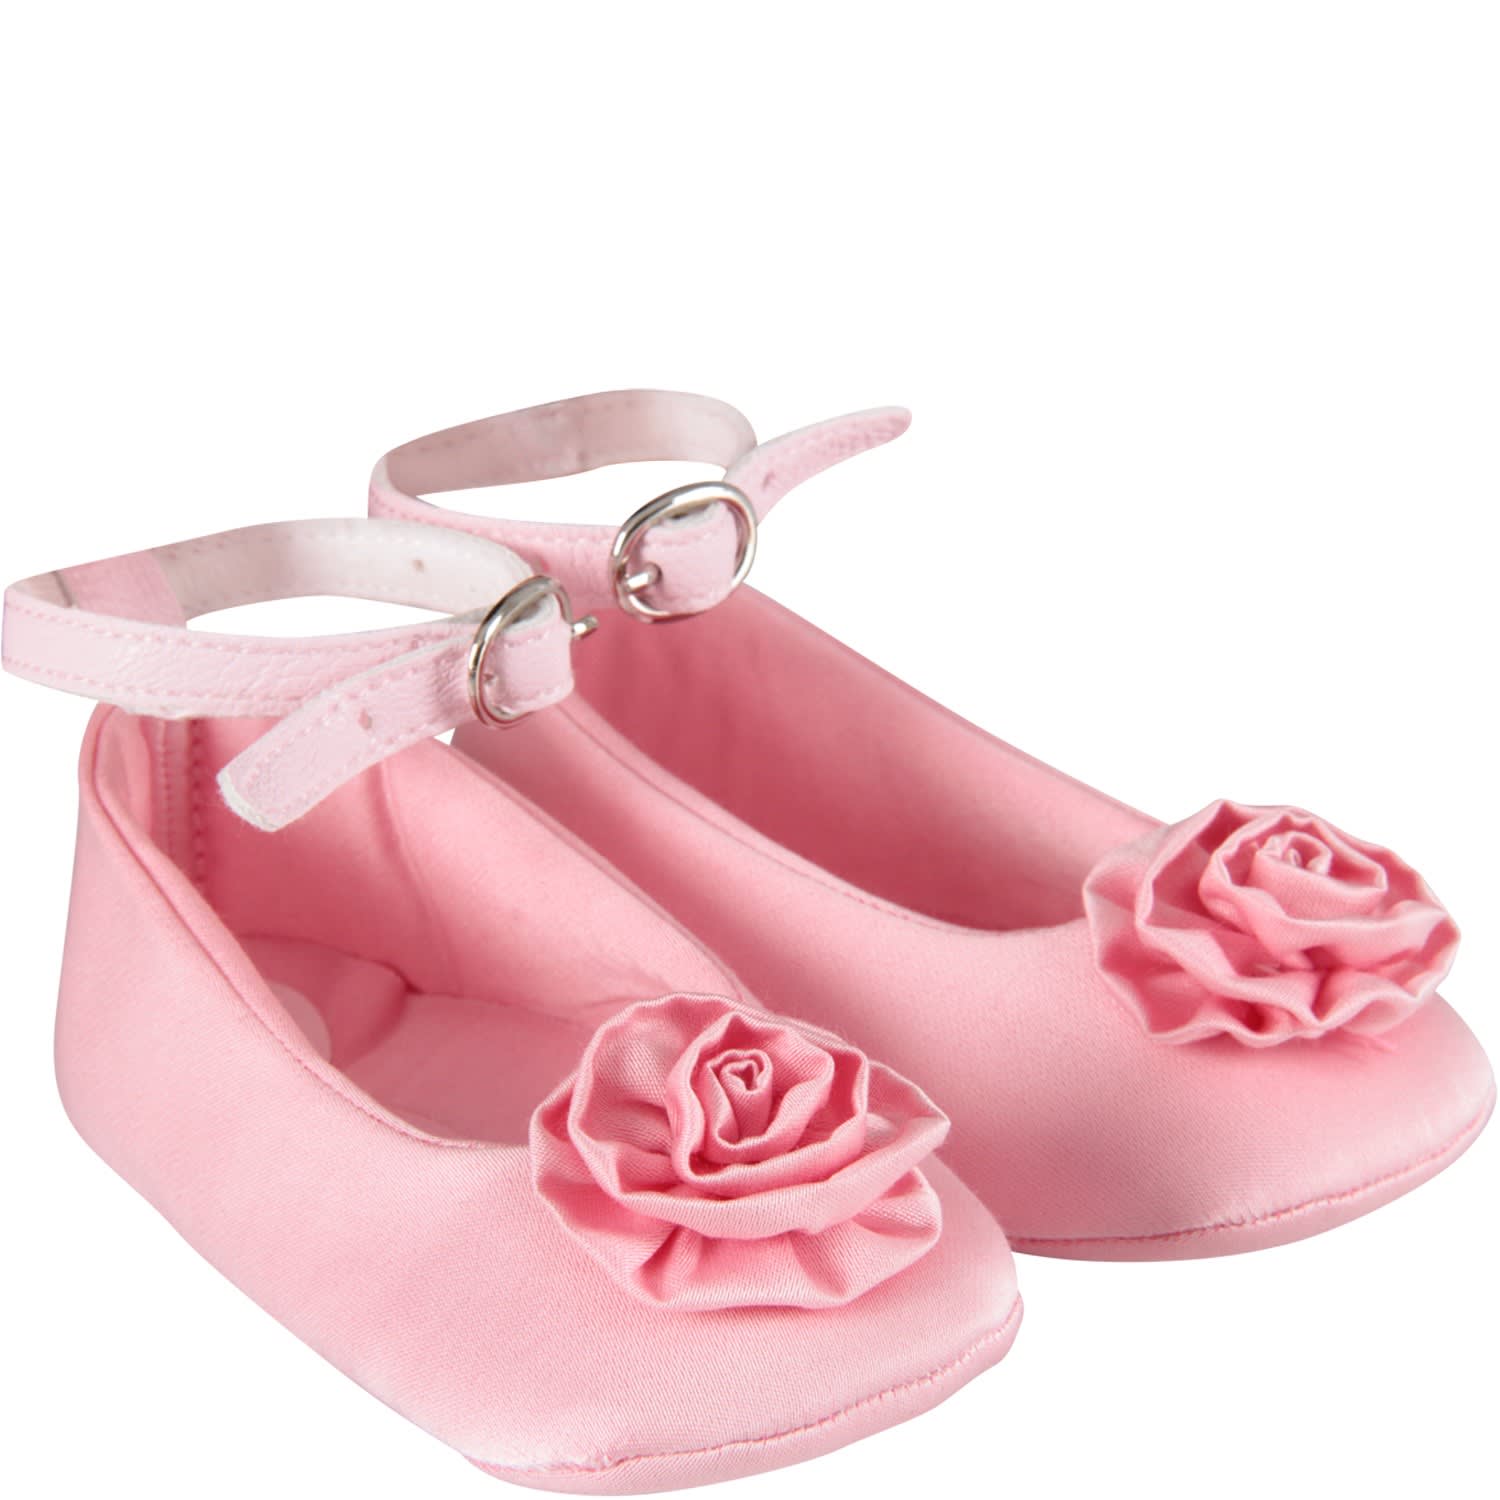 rose pink flat shoes